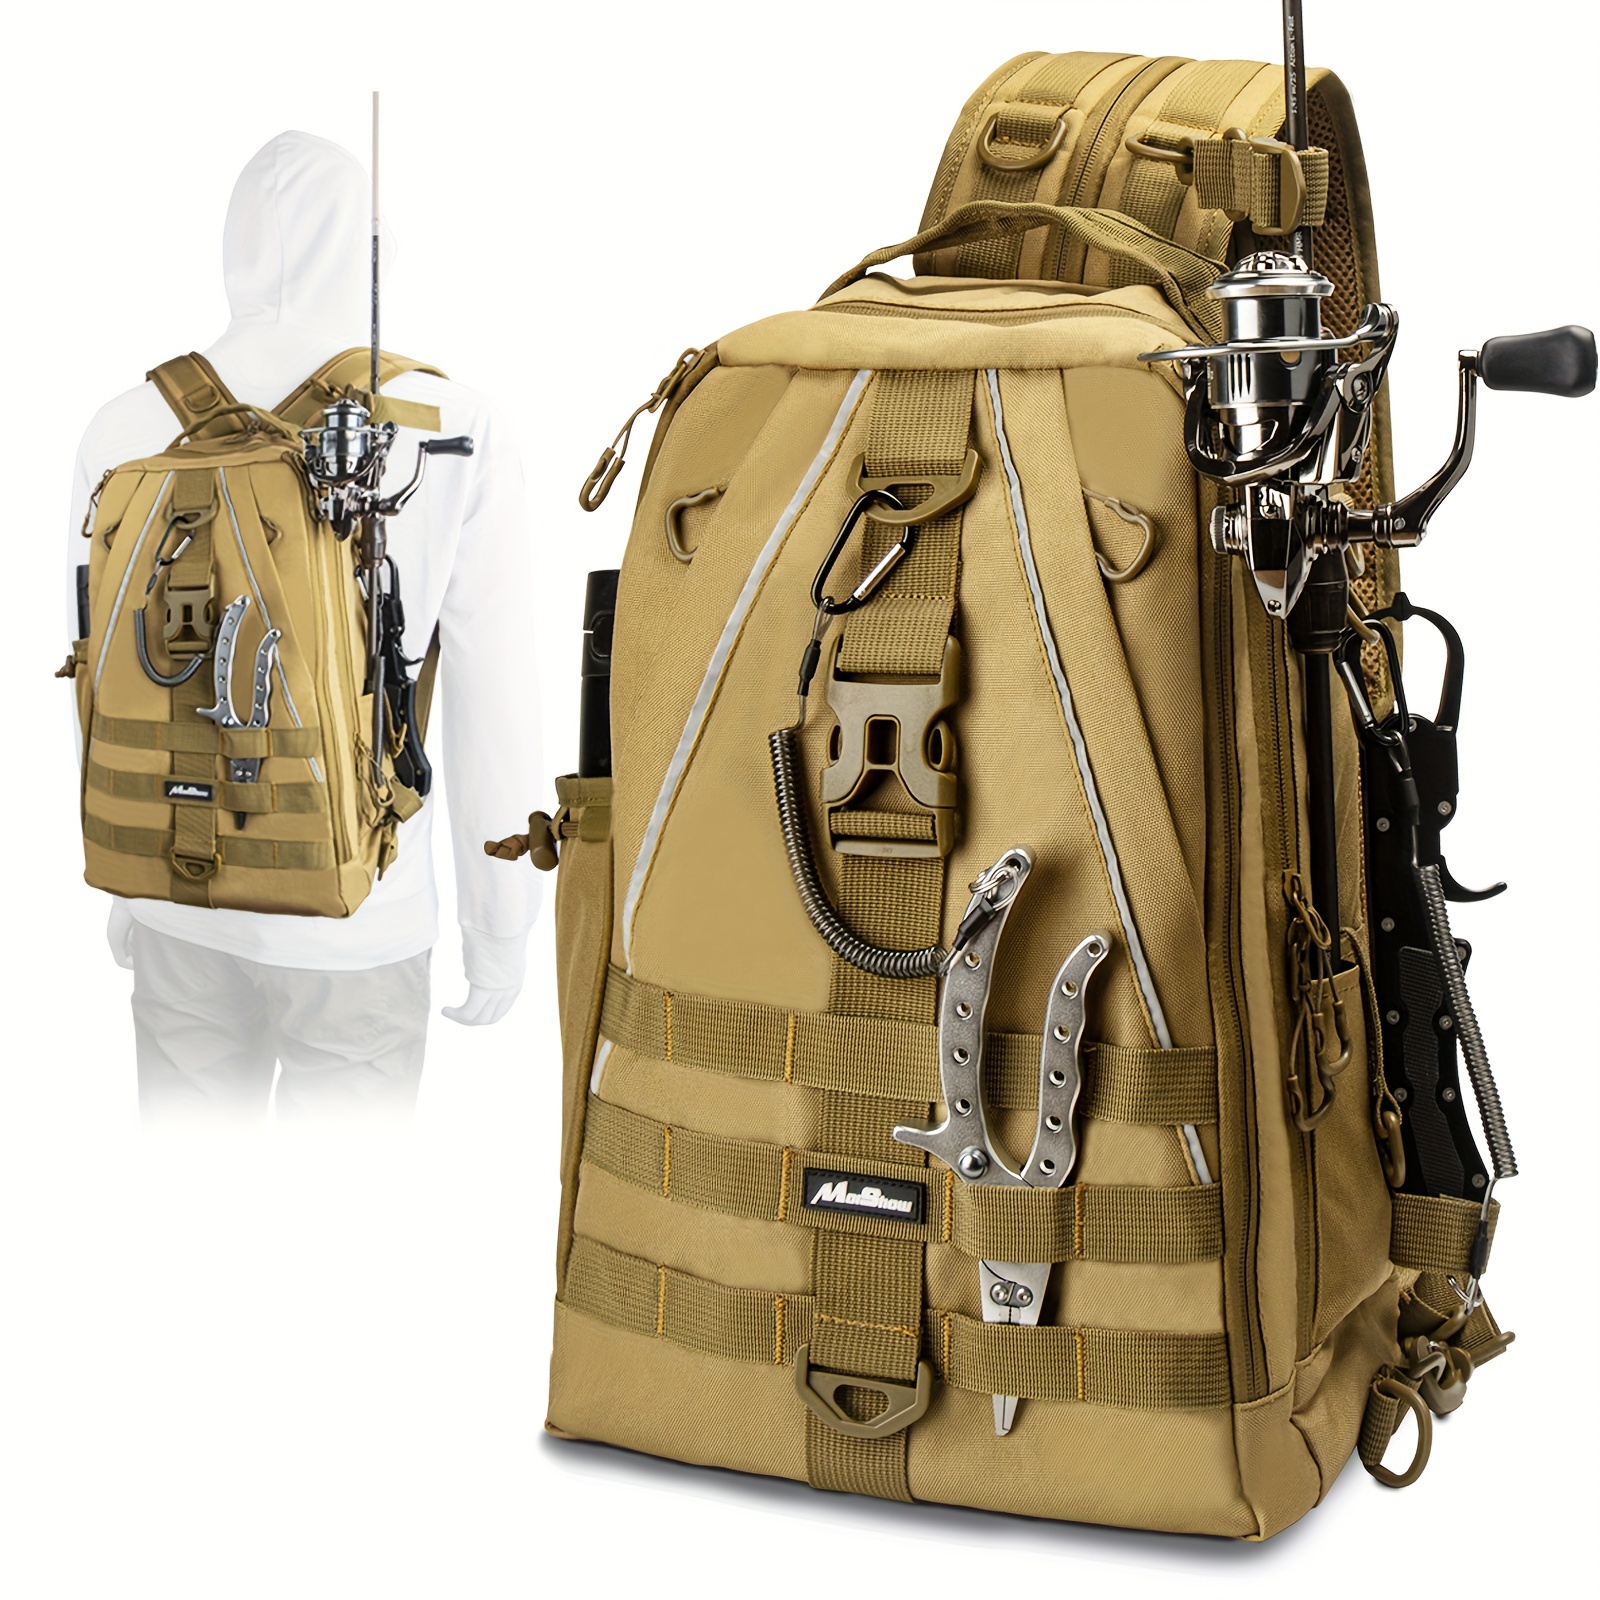 Bassdash Tactical Molle Pouch Multipurpose EDC Waist Bag Pack